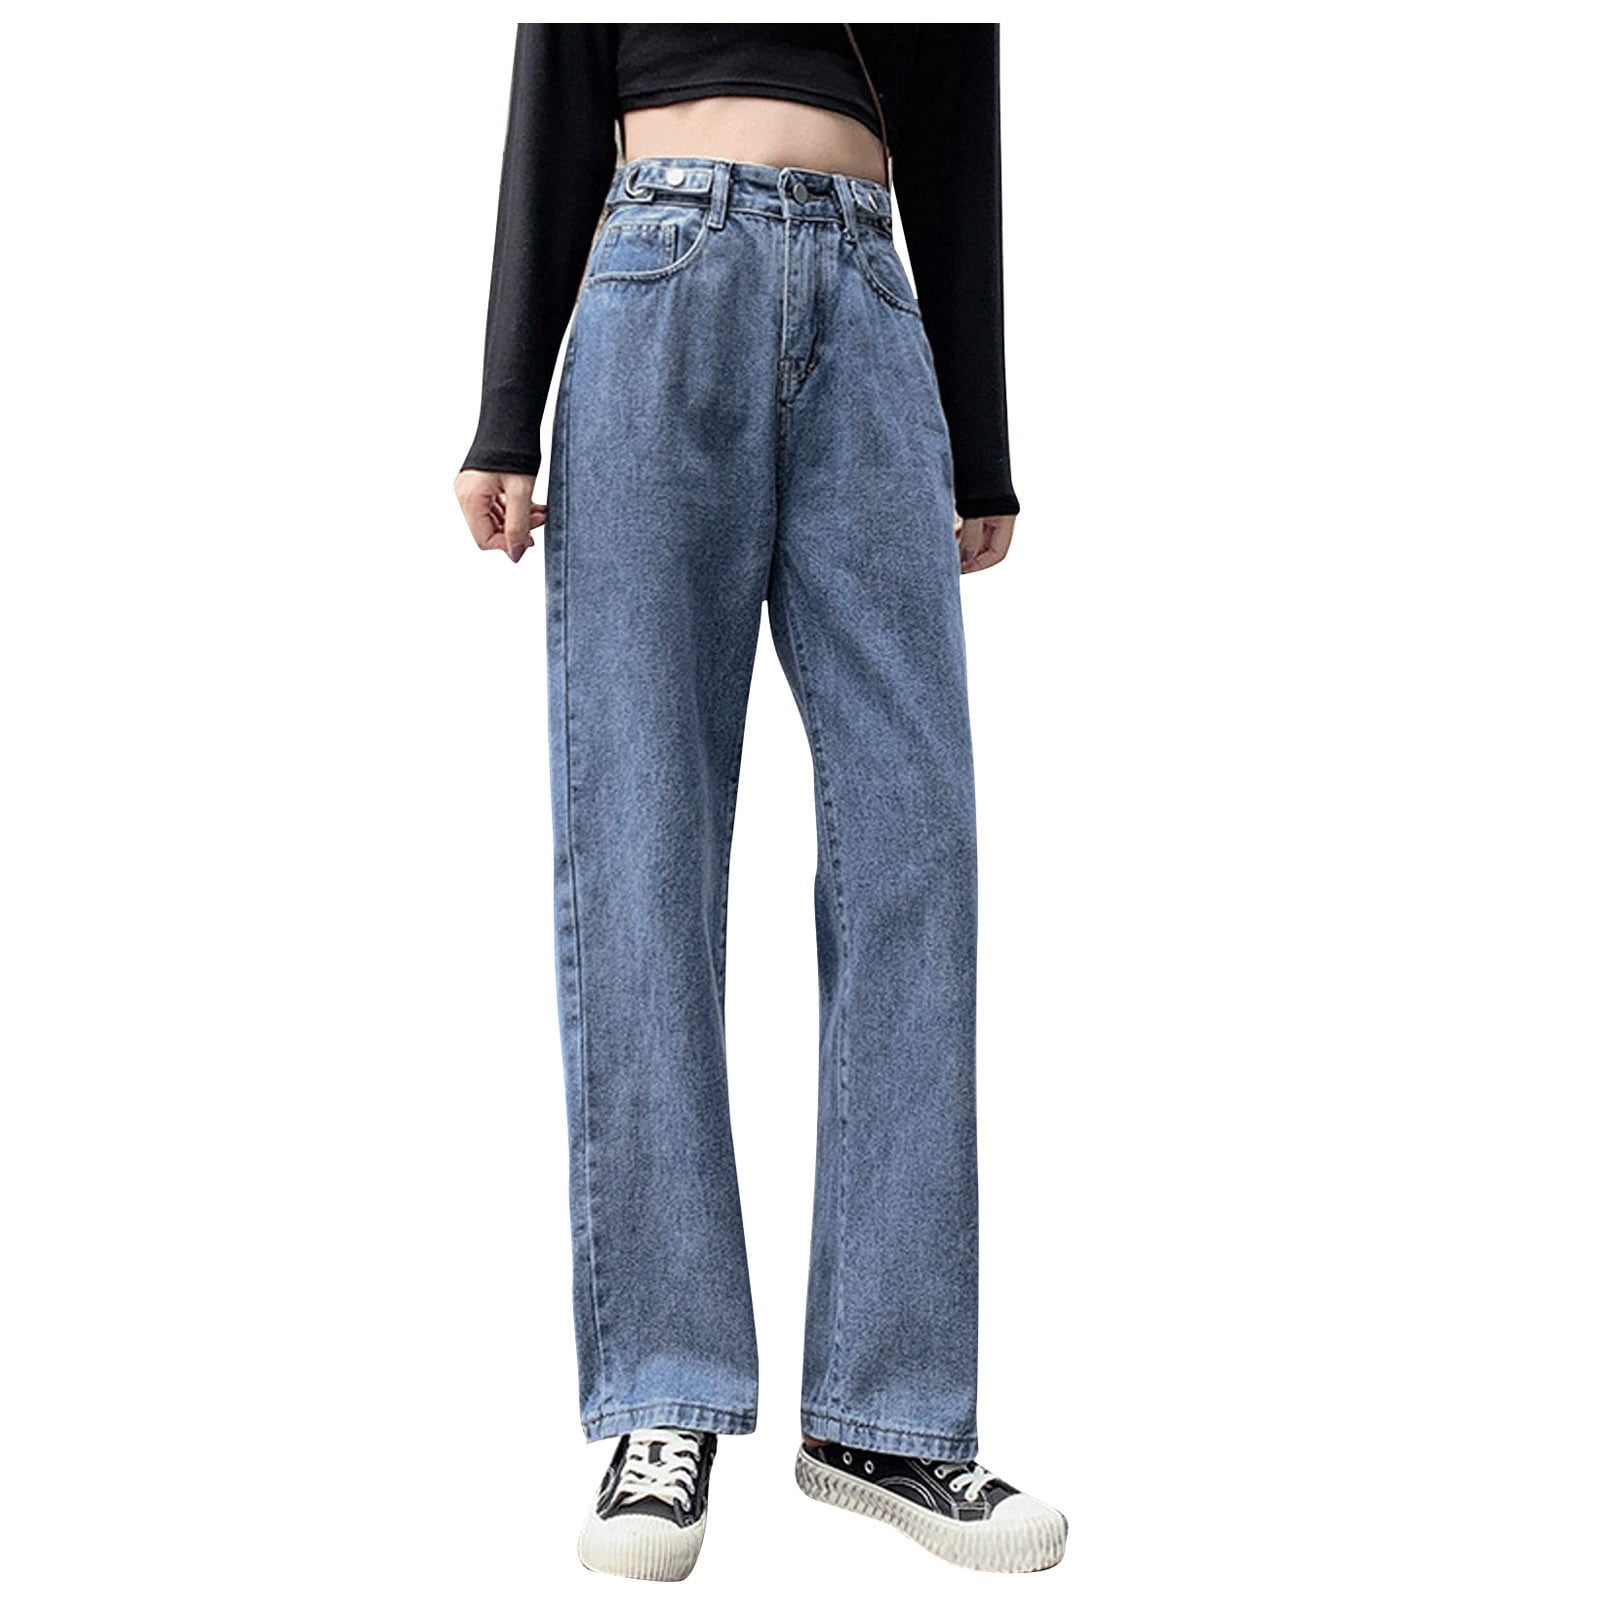 Clearance Jeans Women's Casual Hight Waist Distressed Straight Denim Jeans Vintage Trouser - Walmart.com